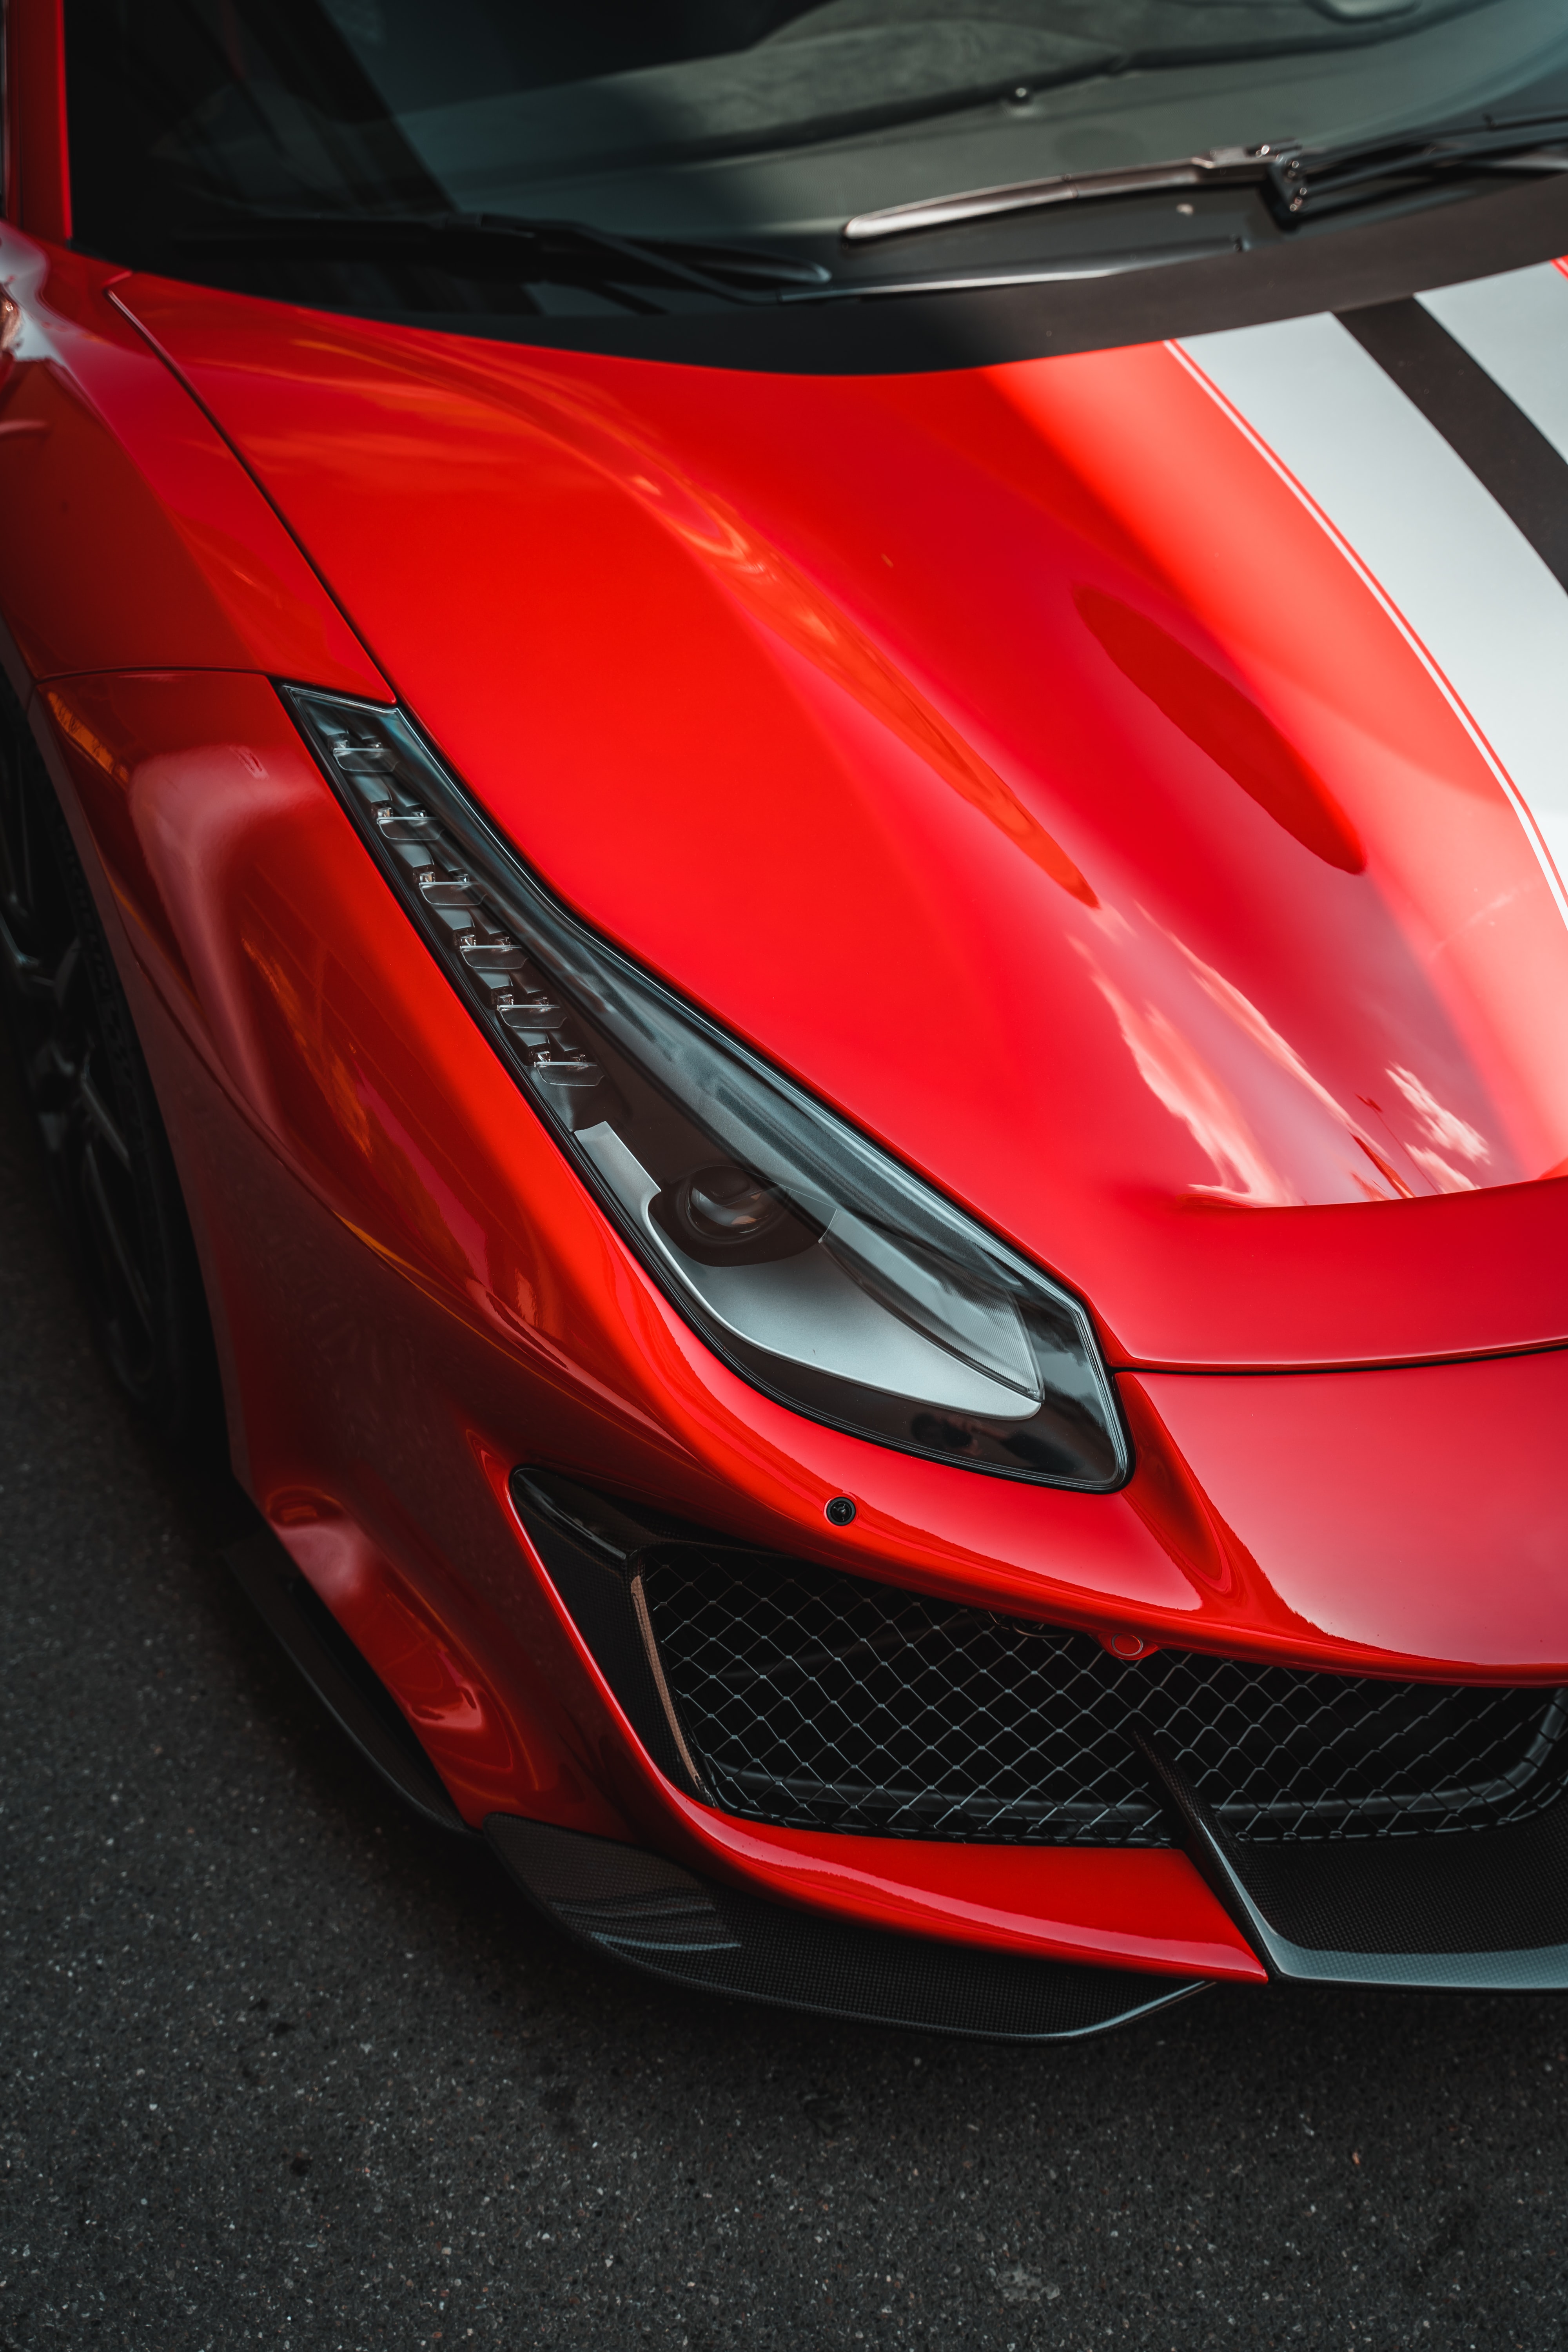 68716 Заставки и Обои Феррари (Ferrari) на телефон. Скачать фара, тачки (cars), автомобиль, спорткар картинки бесплатно